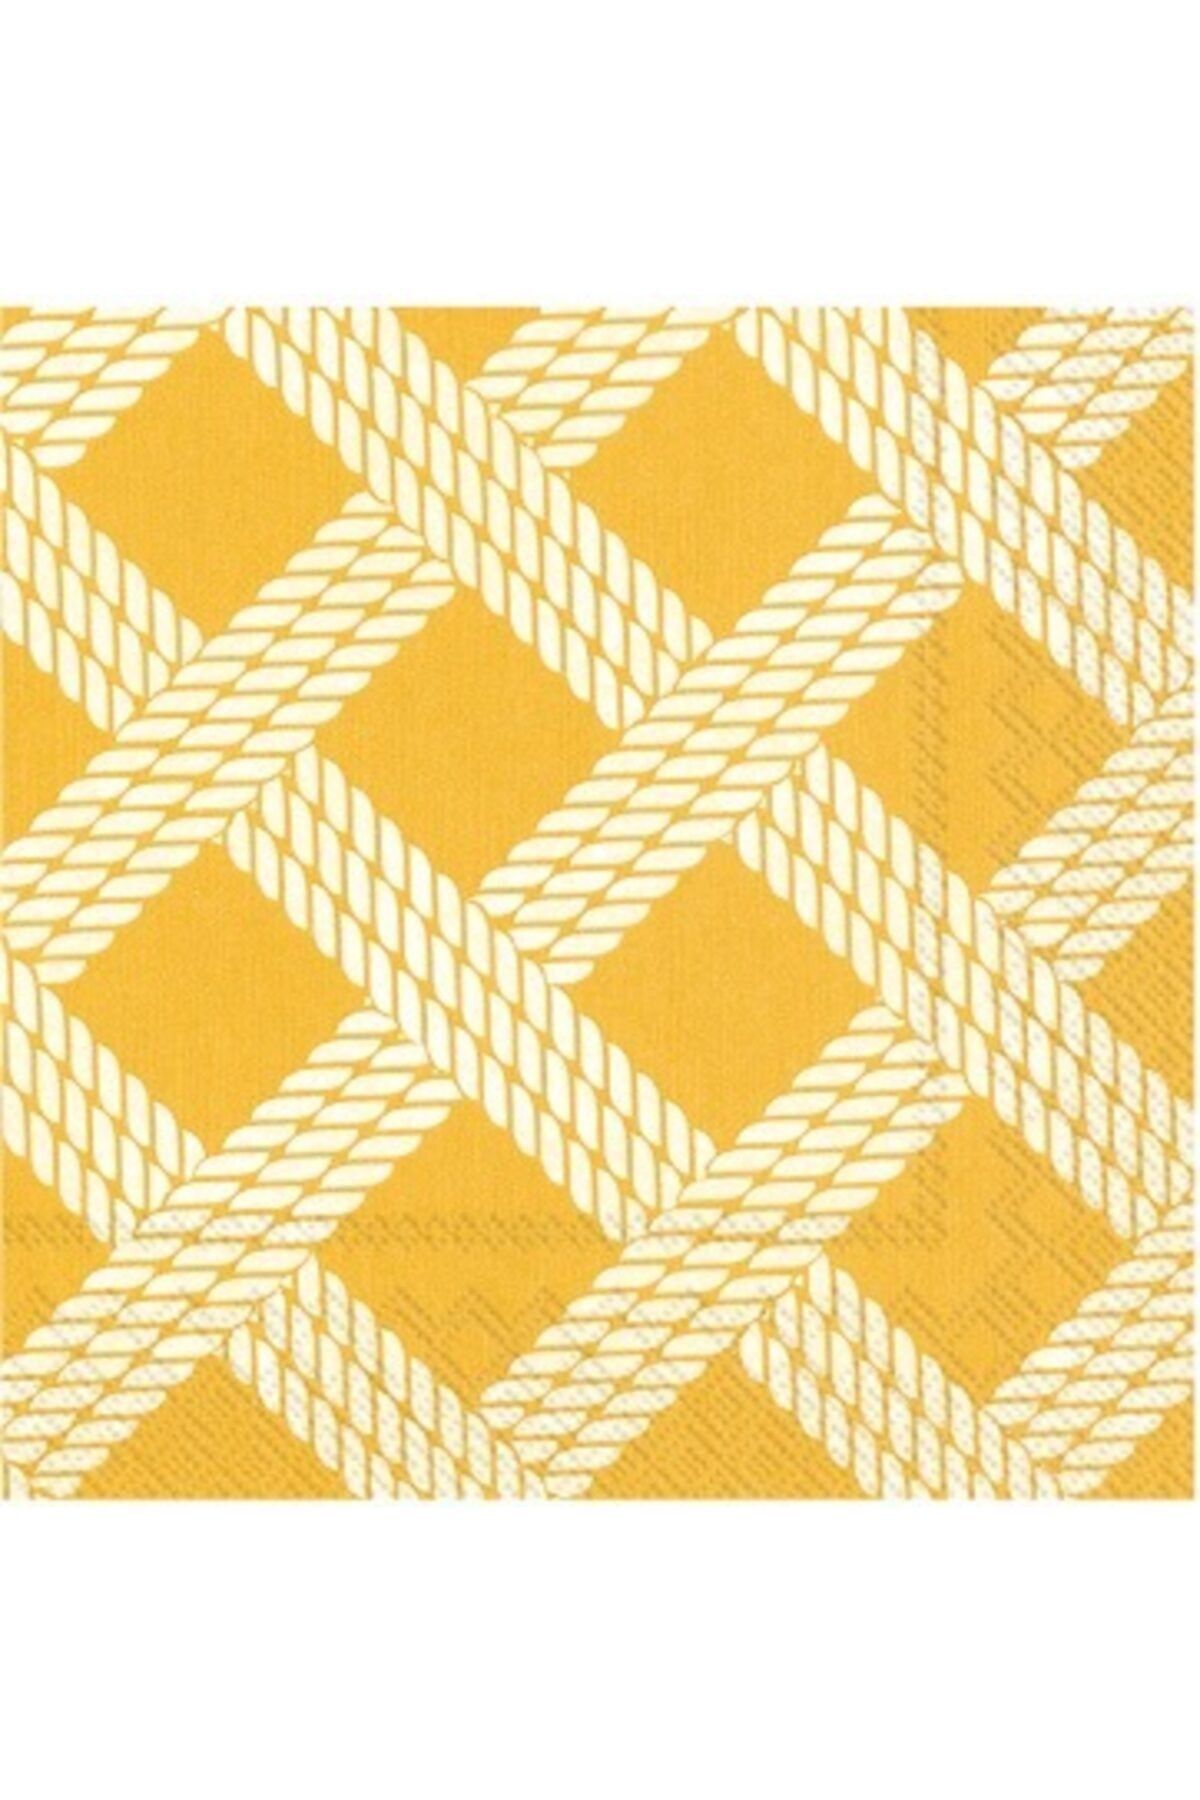 ihr made with love Saılors Rope Yellow